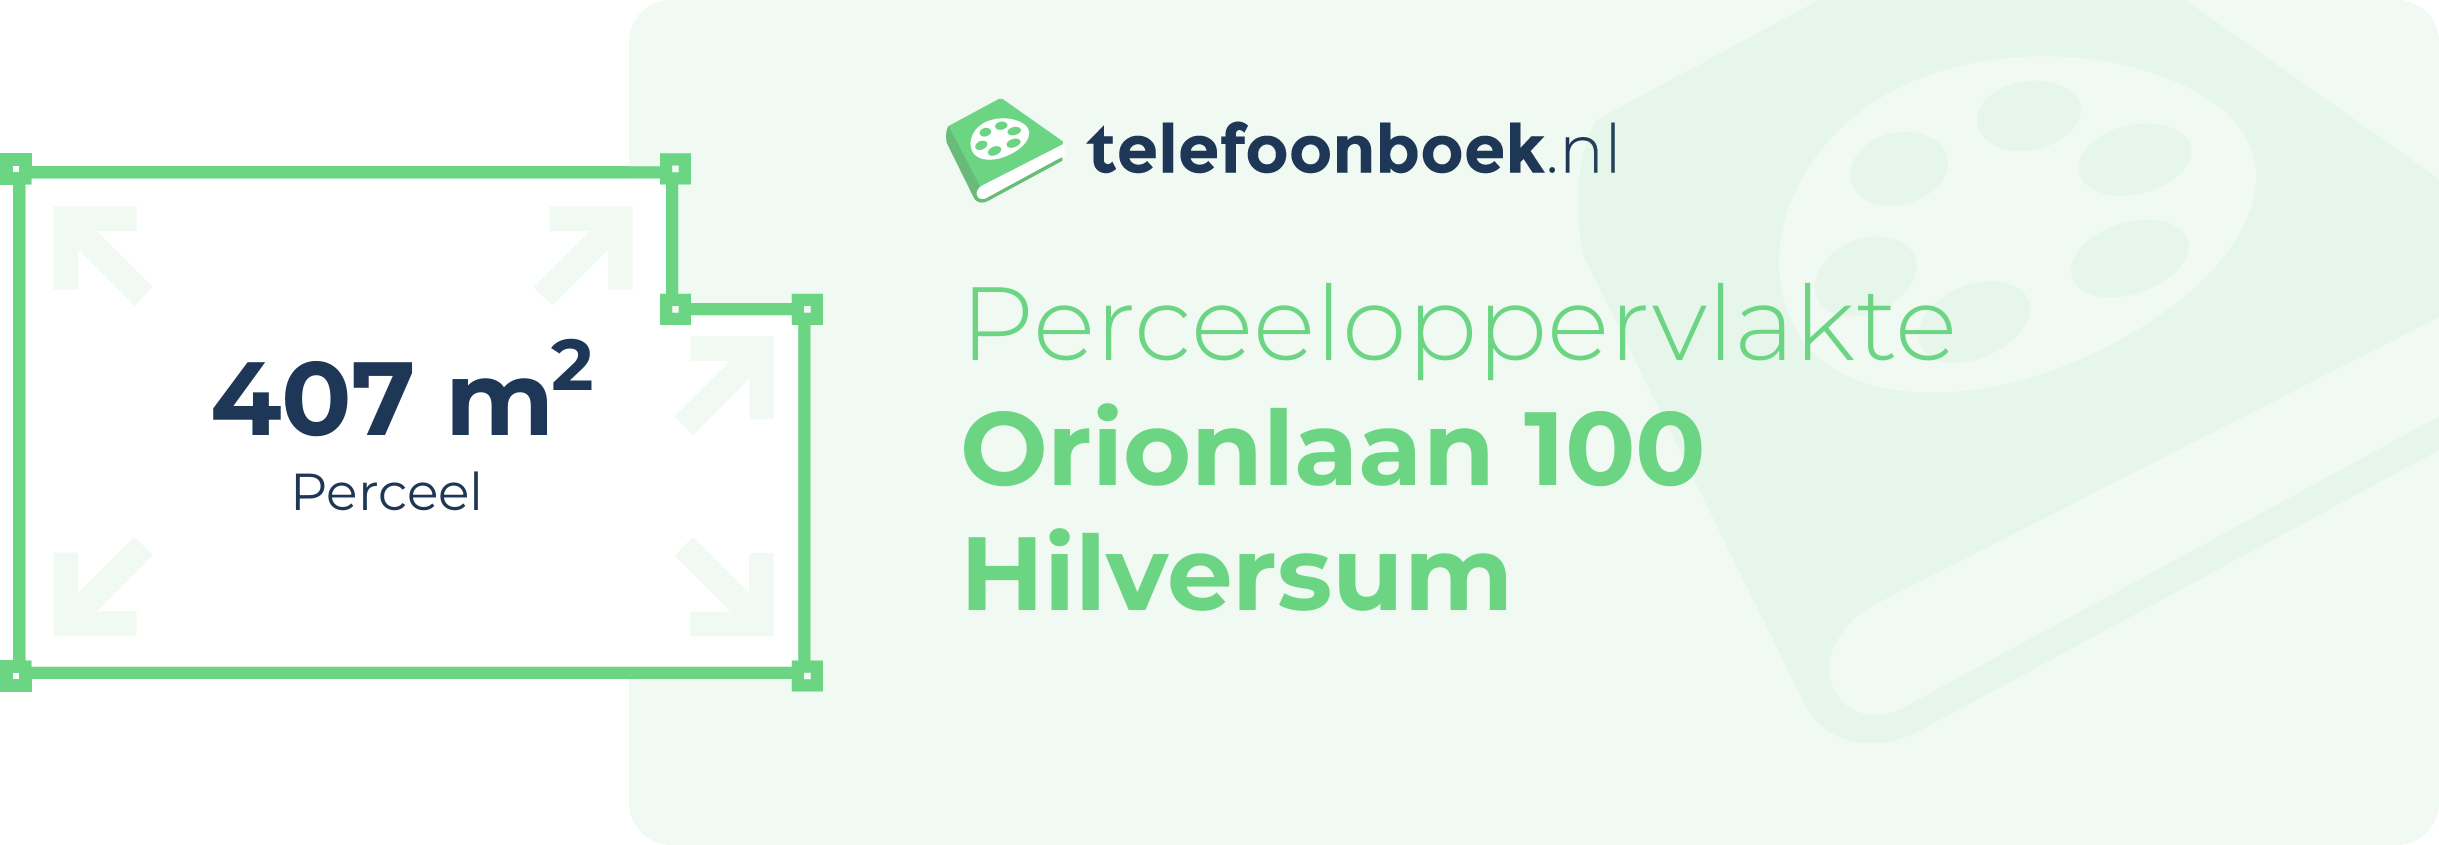 Perceeloppervlakte Orionlaan 100 Hilversum